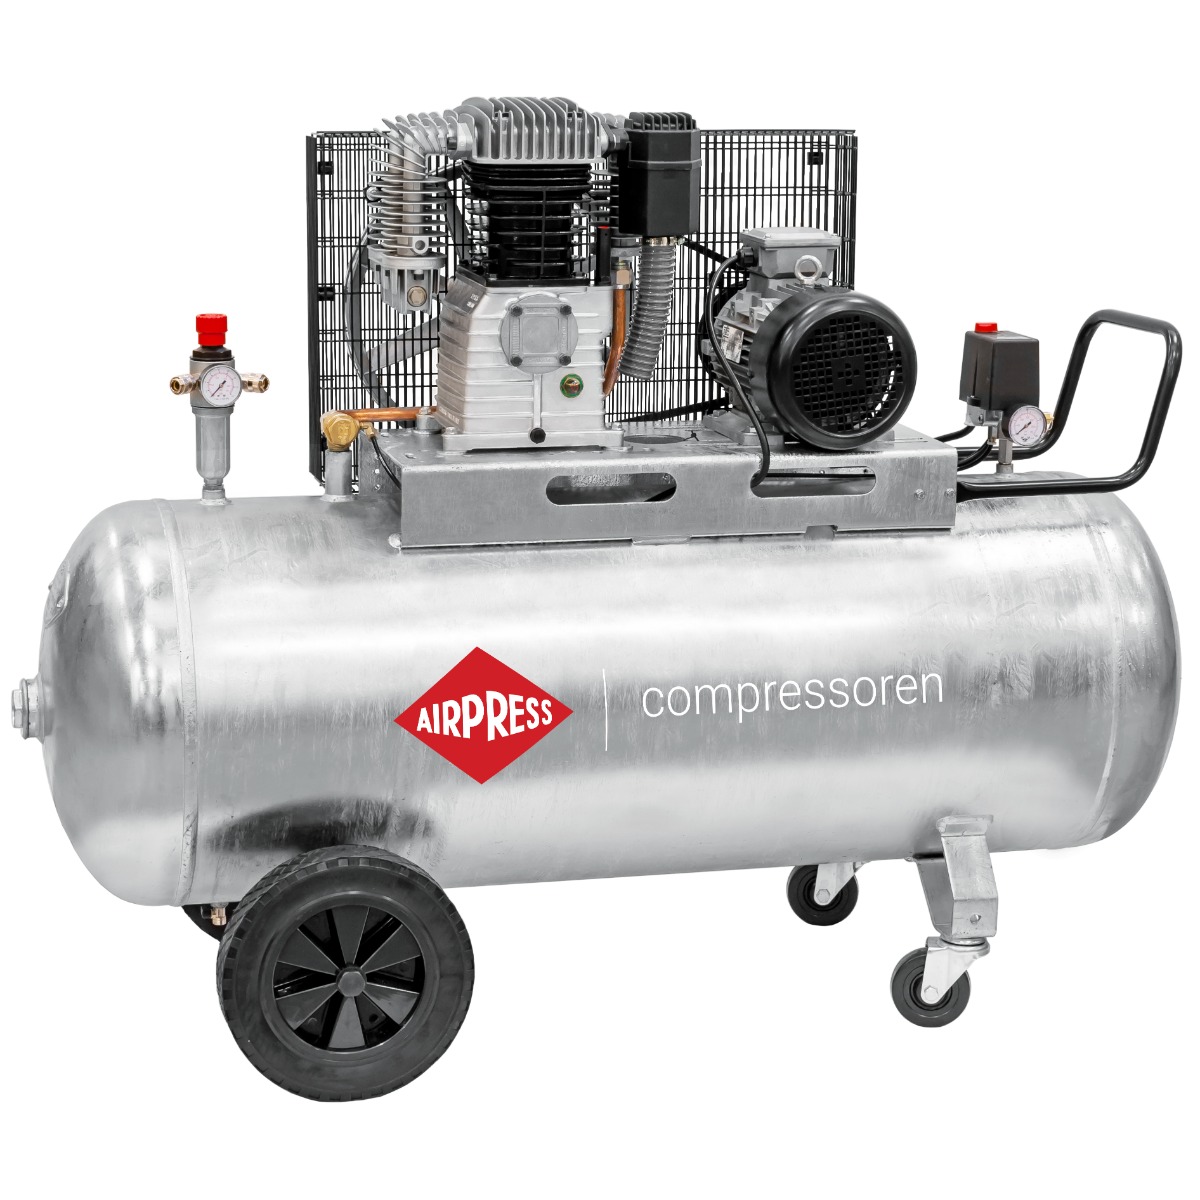 G 700-300 Pro compressor